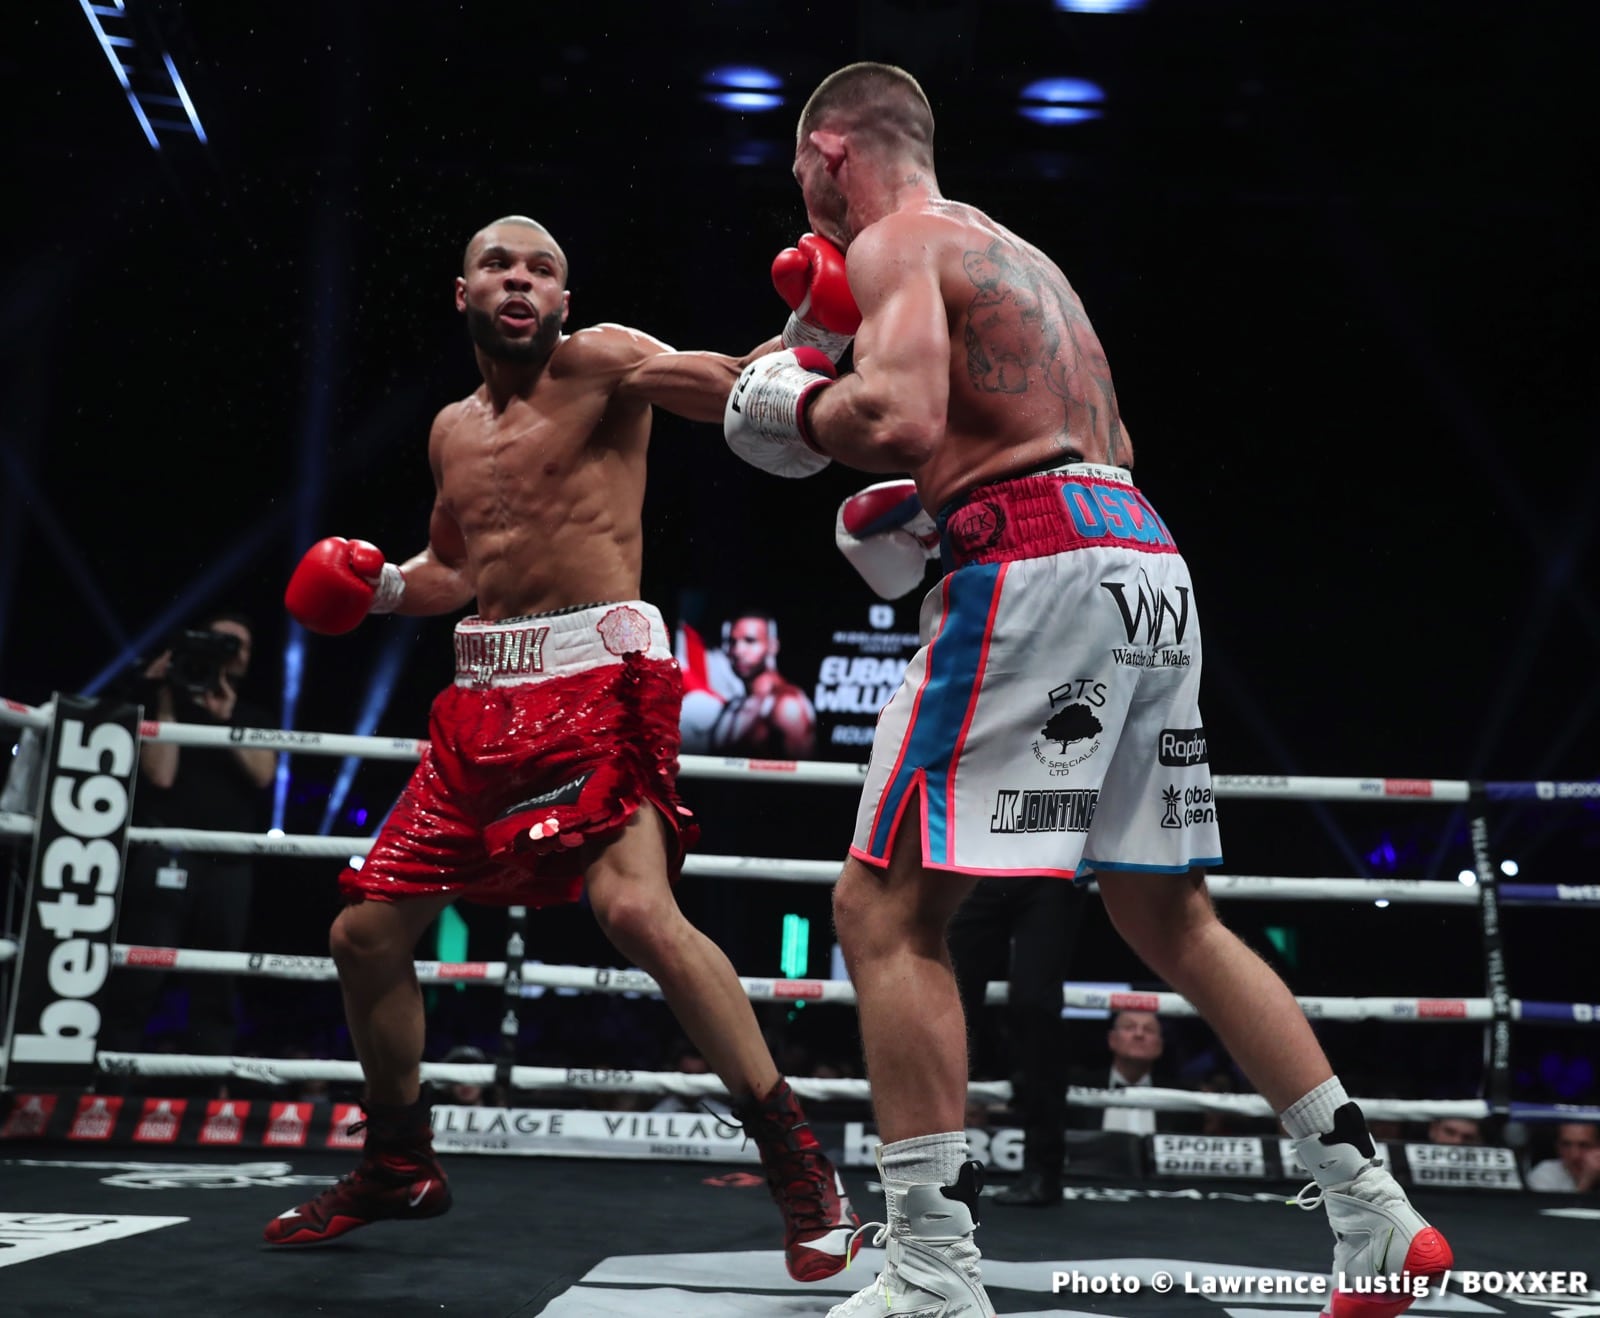 Chris Eubank Jr, Gennady Golovkin boxing photo and news image